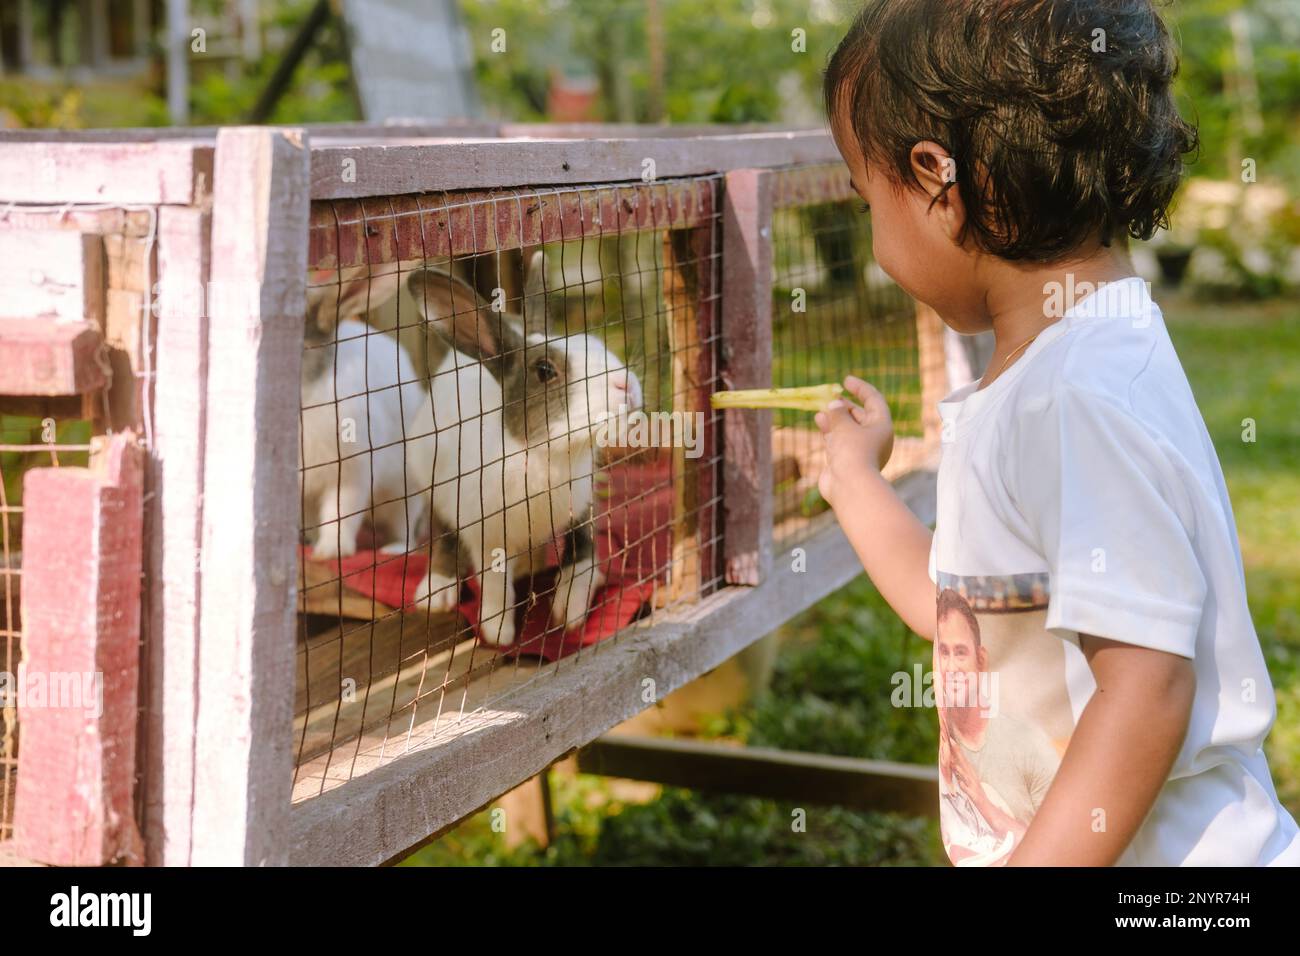 A Child feeding a rabbit at a Zoo,Guwahati,India Stock Photo